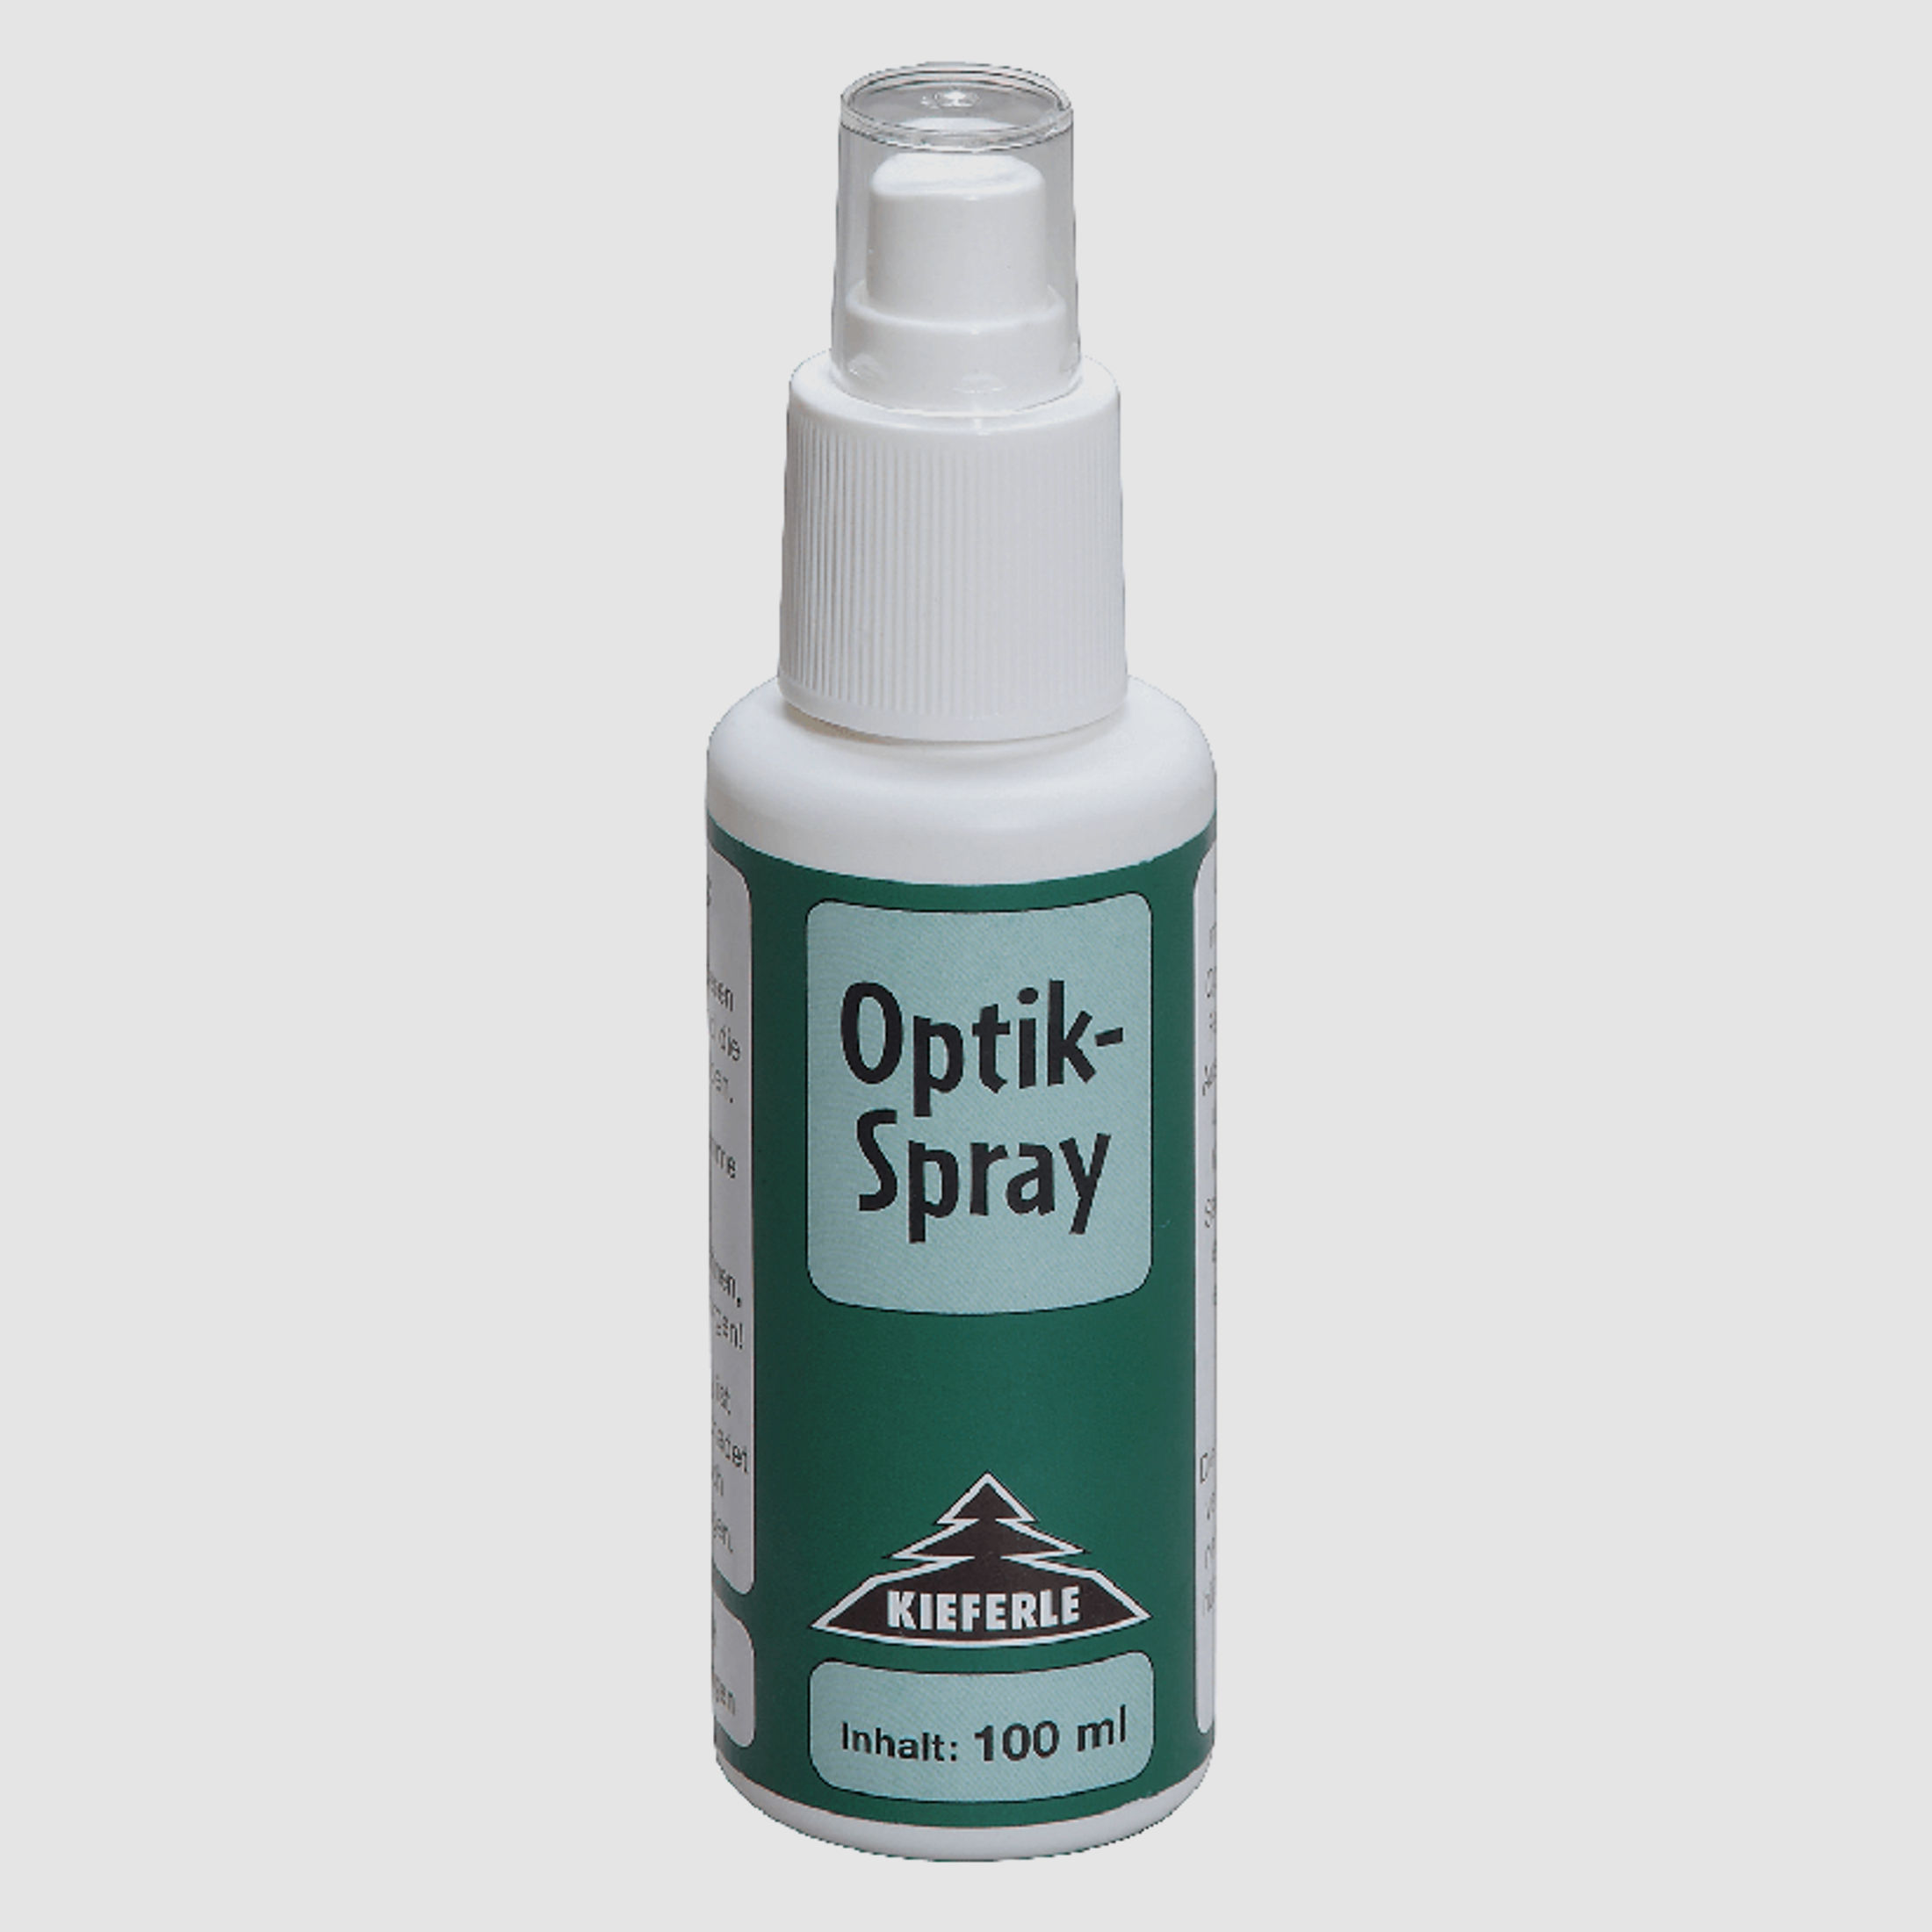 Kieferle Optik-Spray